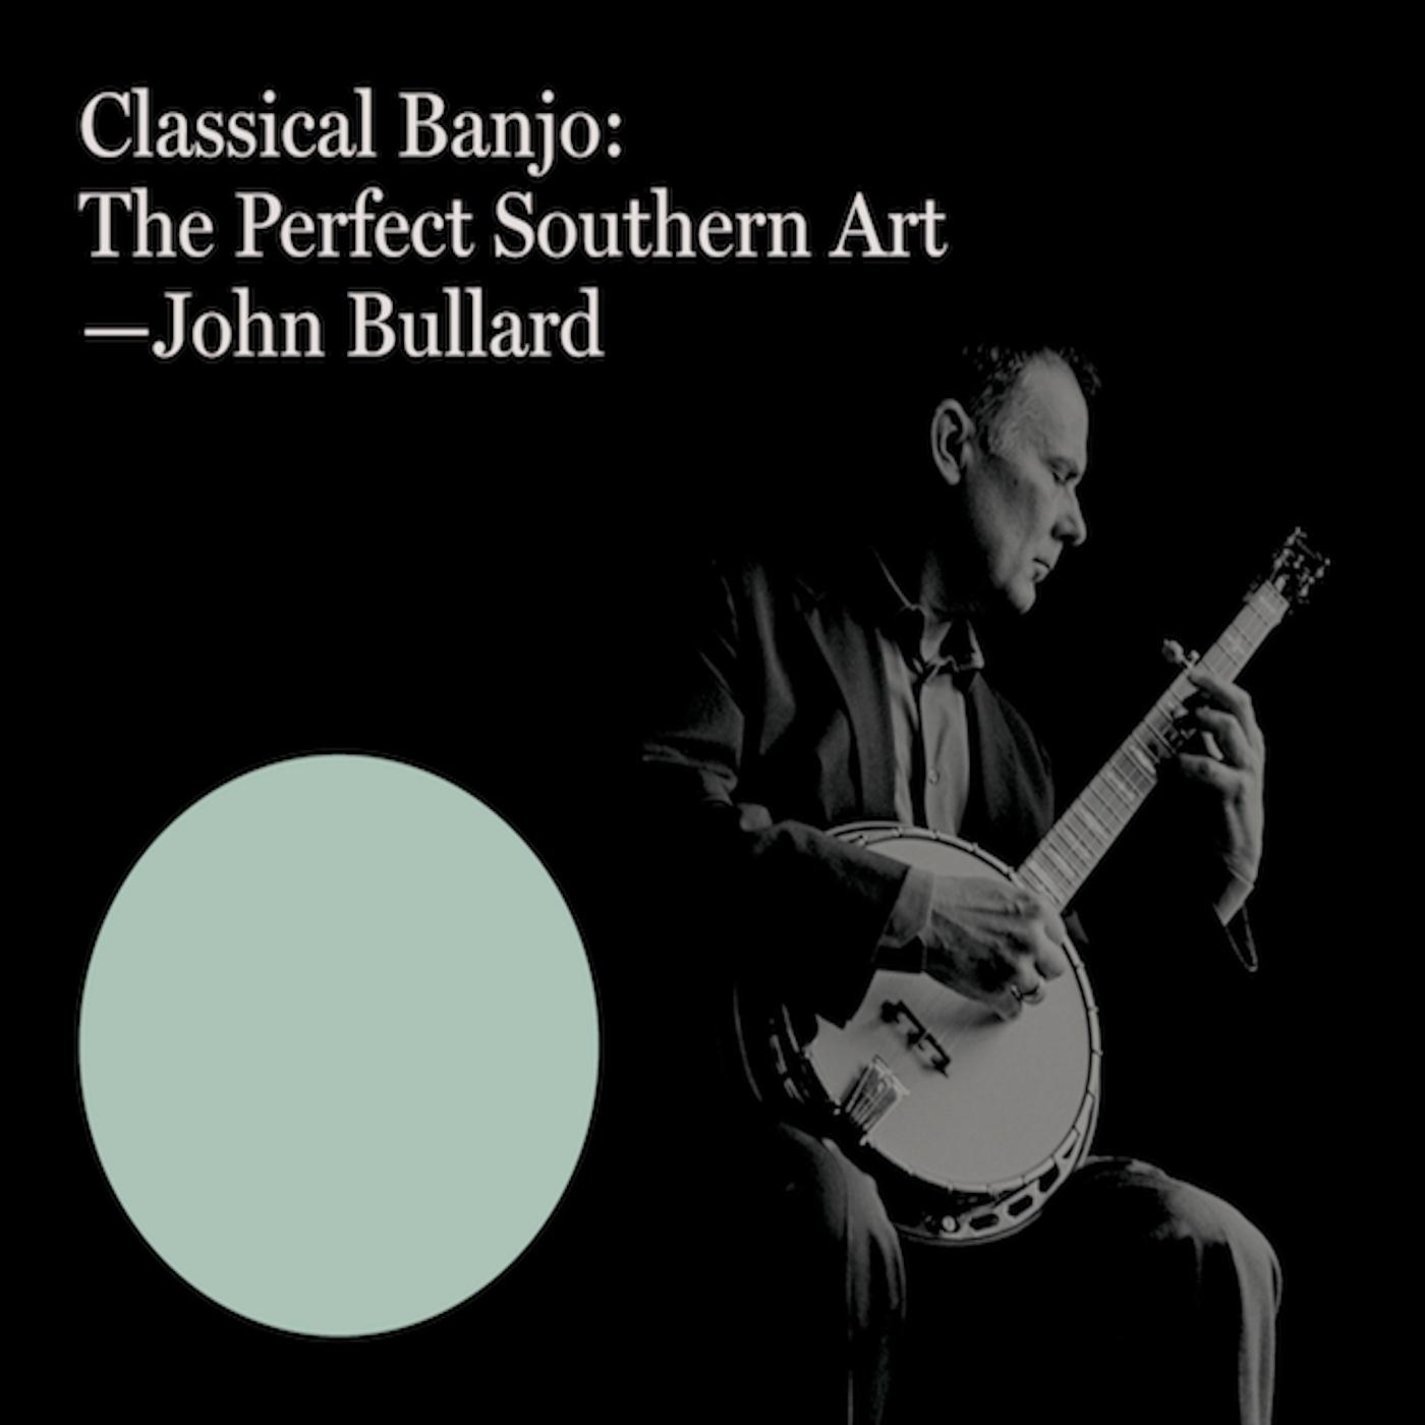 John Bullard's Classical Banjo